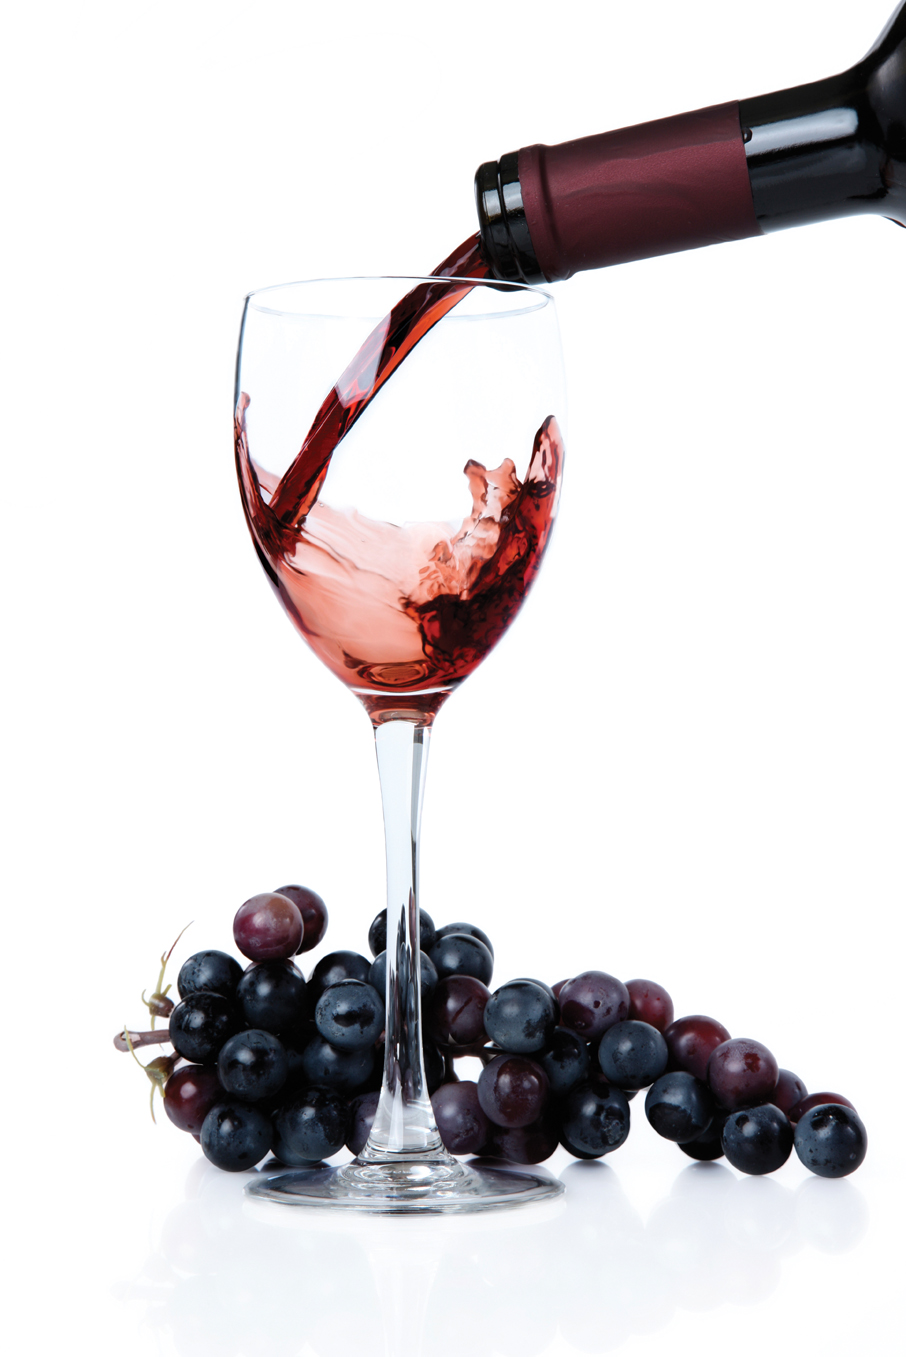 Eniva ResVante Red Wine benefits